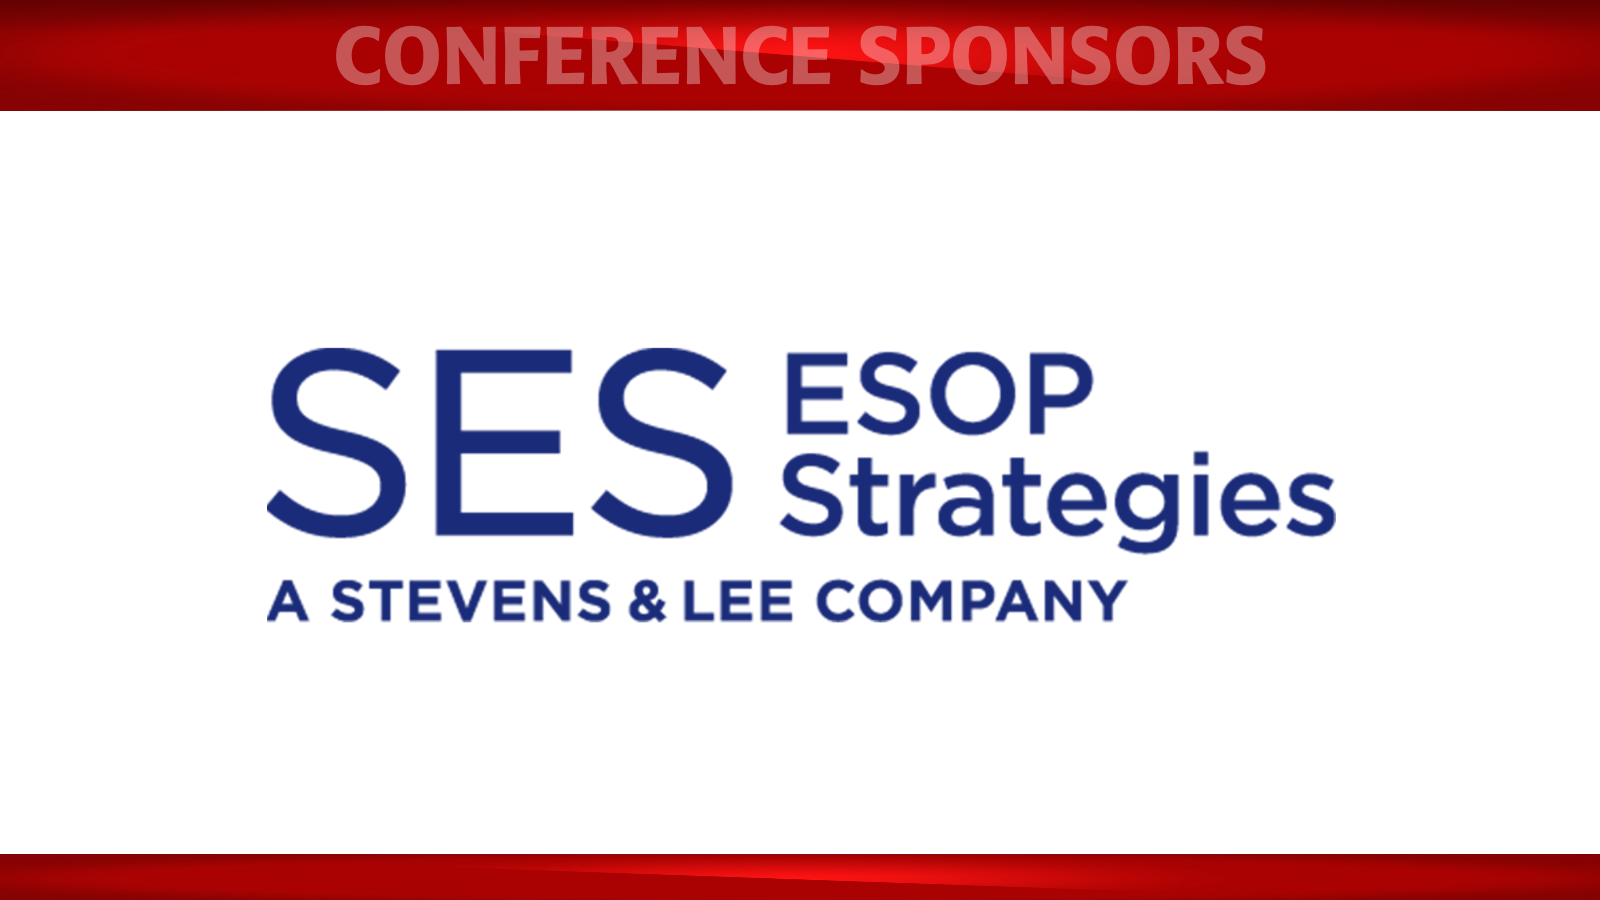 Image of SES ESOP Strategies logo